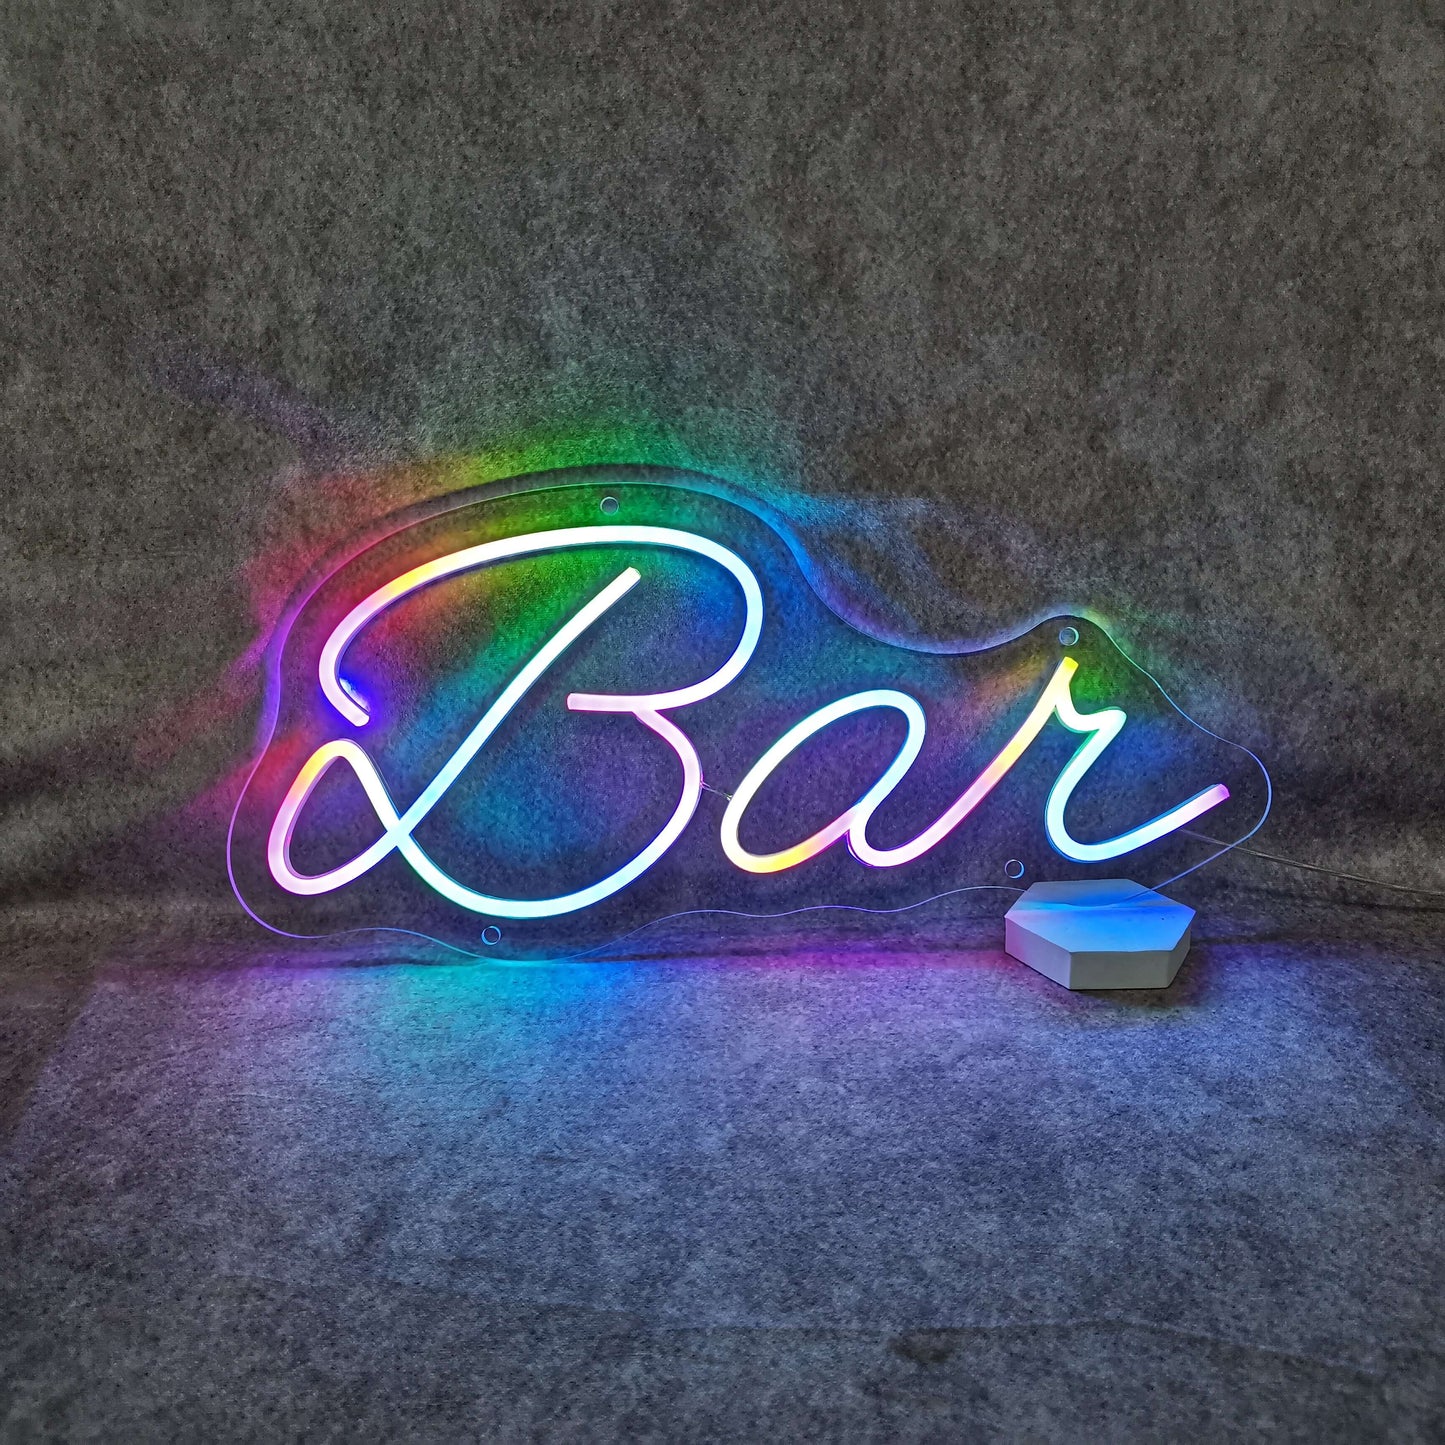 Bar Neon Sign - The Art Neon